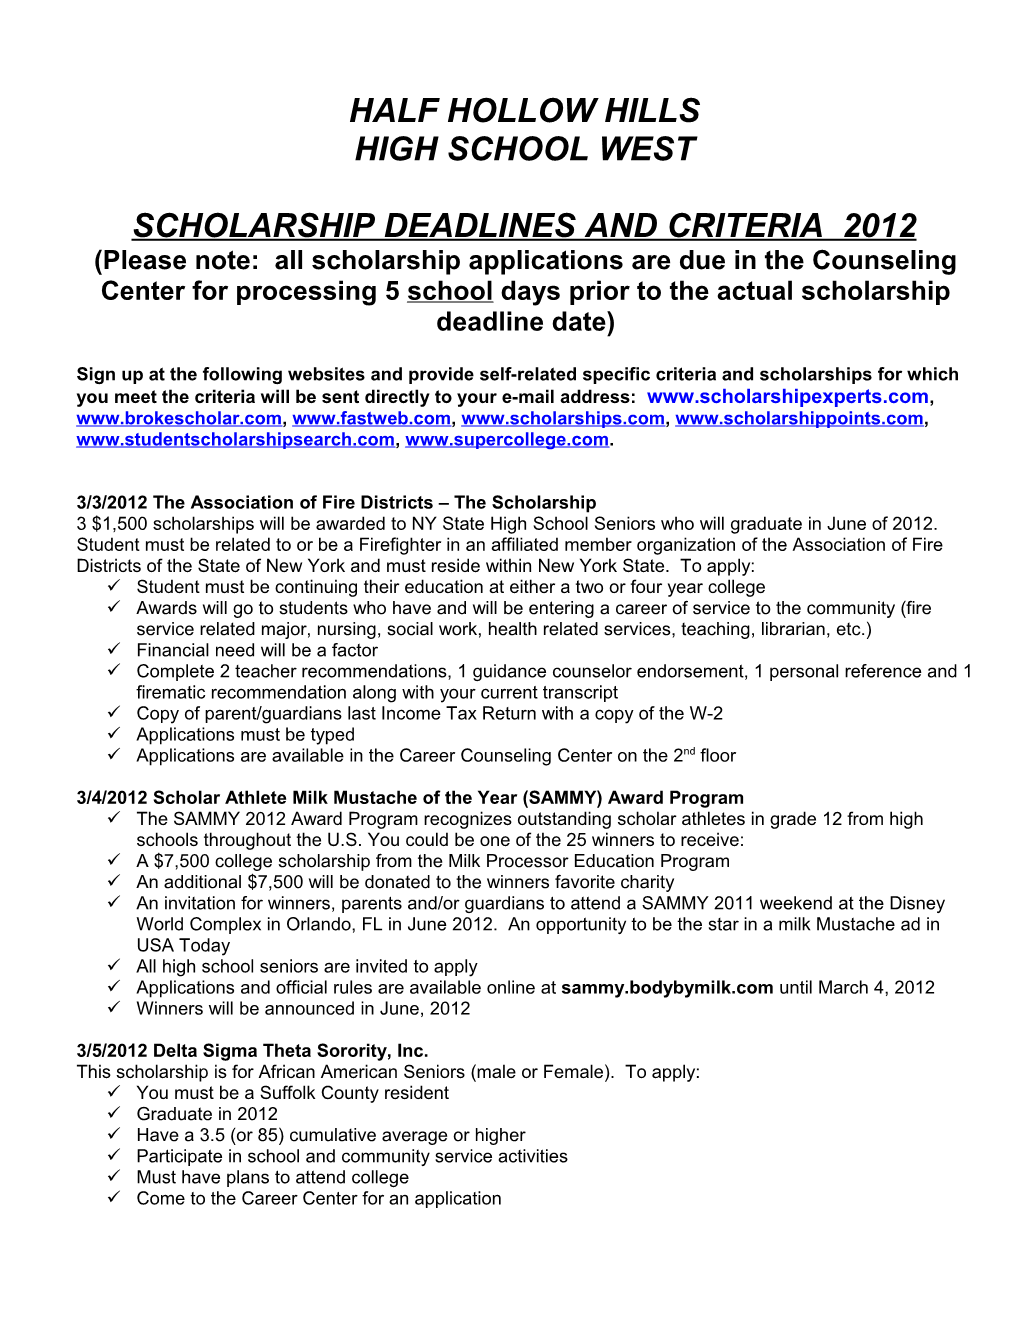 Scholarship Deadlines and Criteria 2012